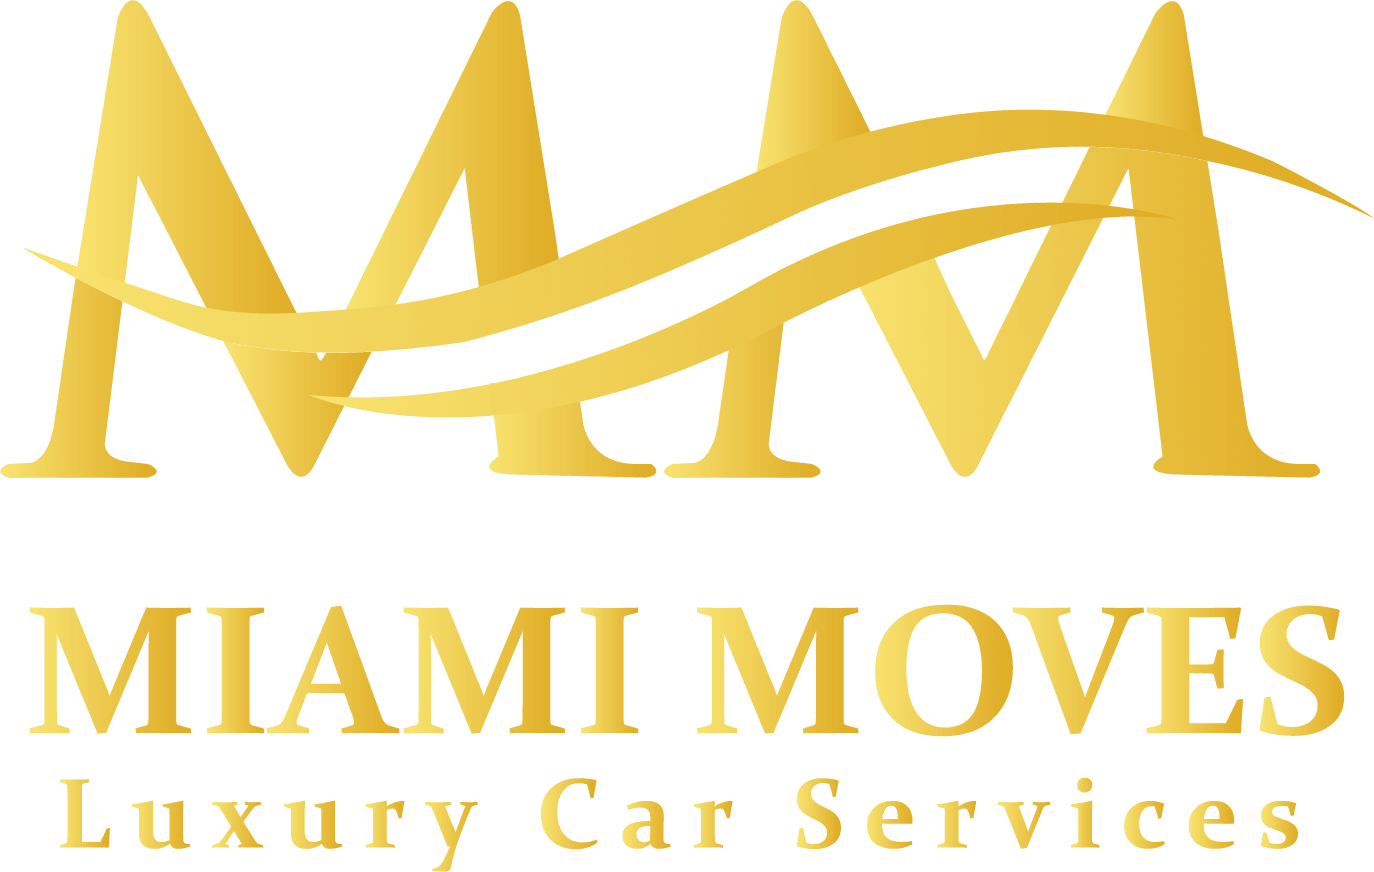 Miami Moves Car Services